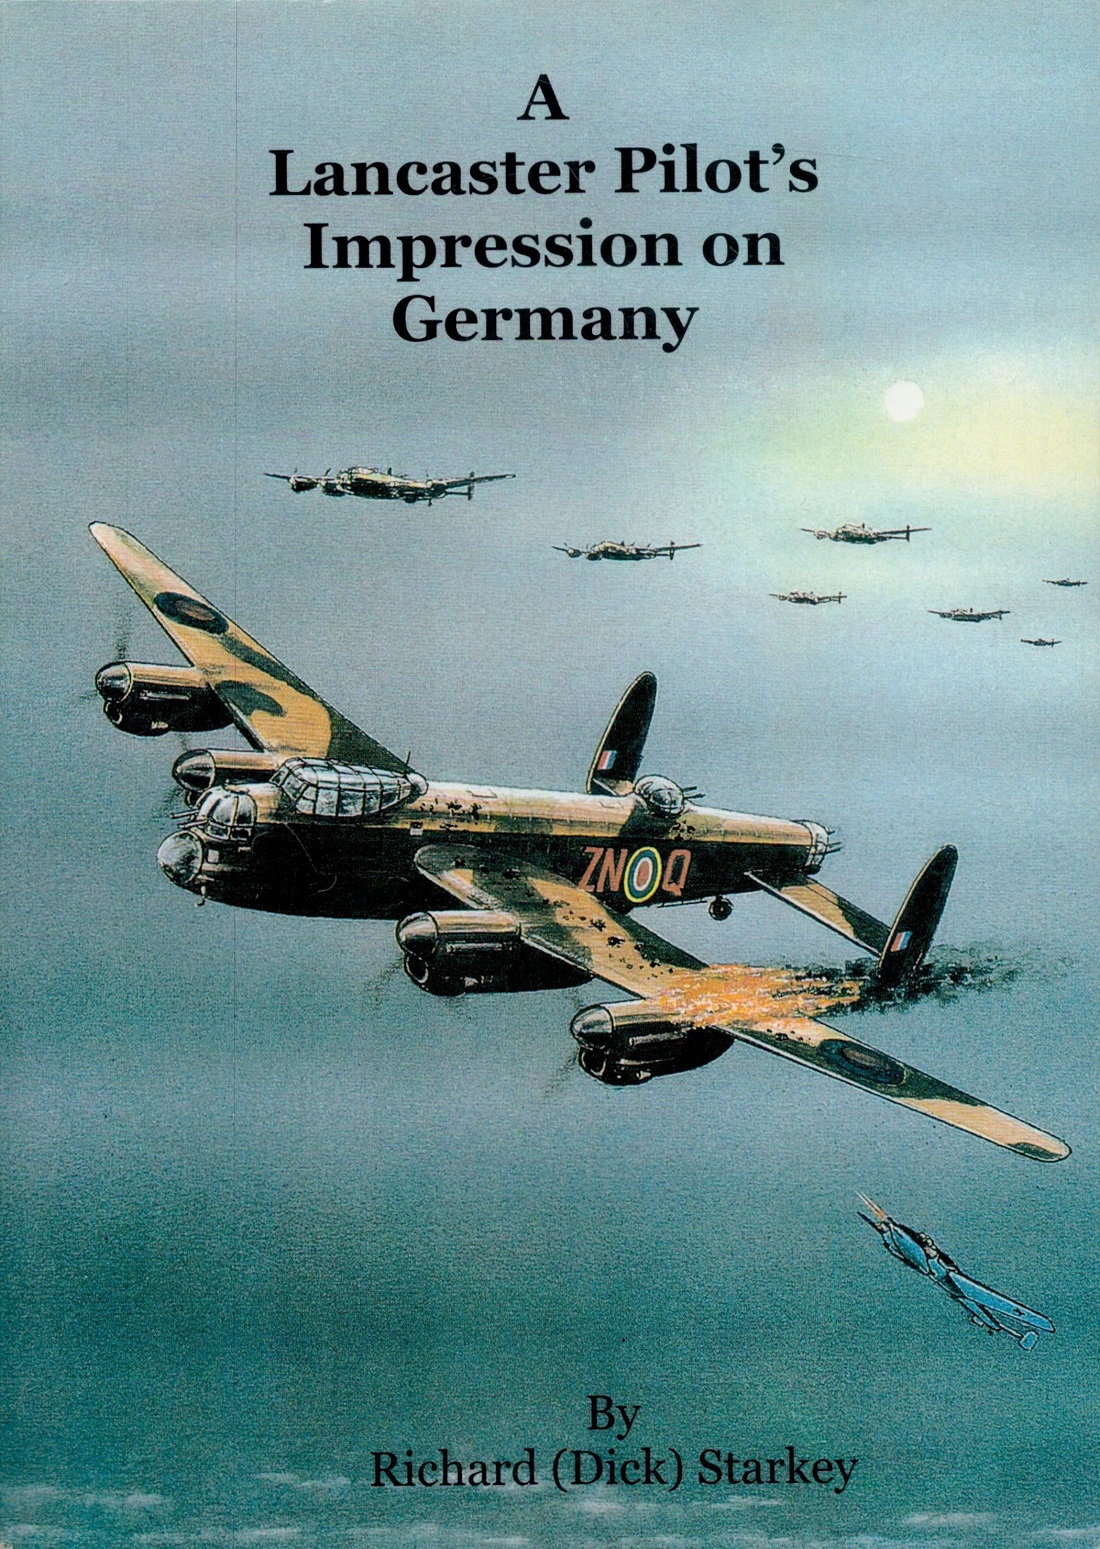 WW2 Flt Lt and POW Dick Starkey Signed A Lancaster Pilot's impression on Germany Paperback Book. - Bild 3 aus 9